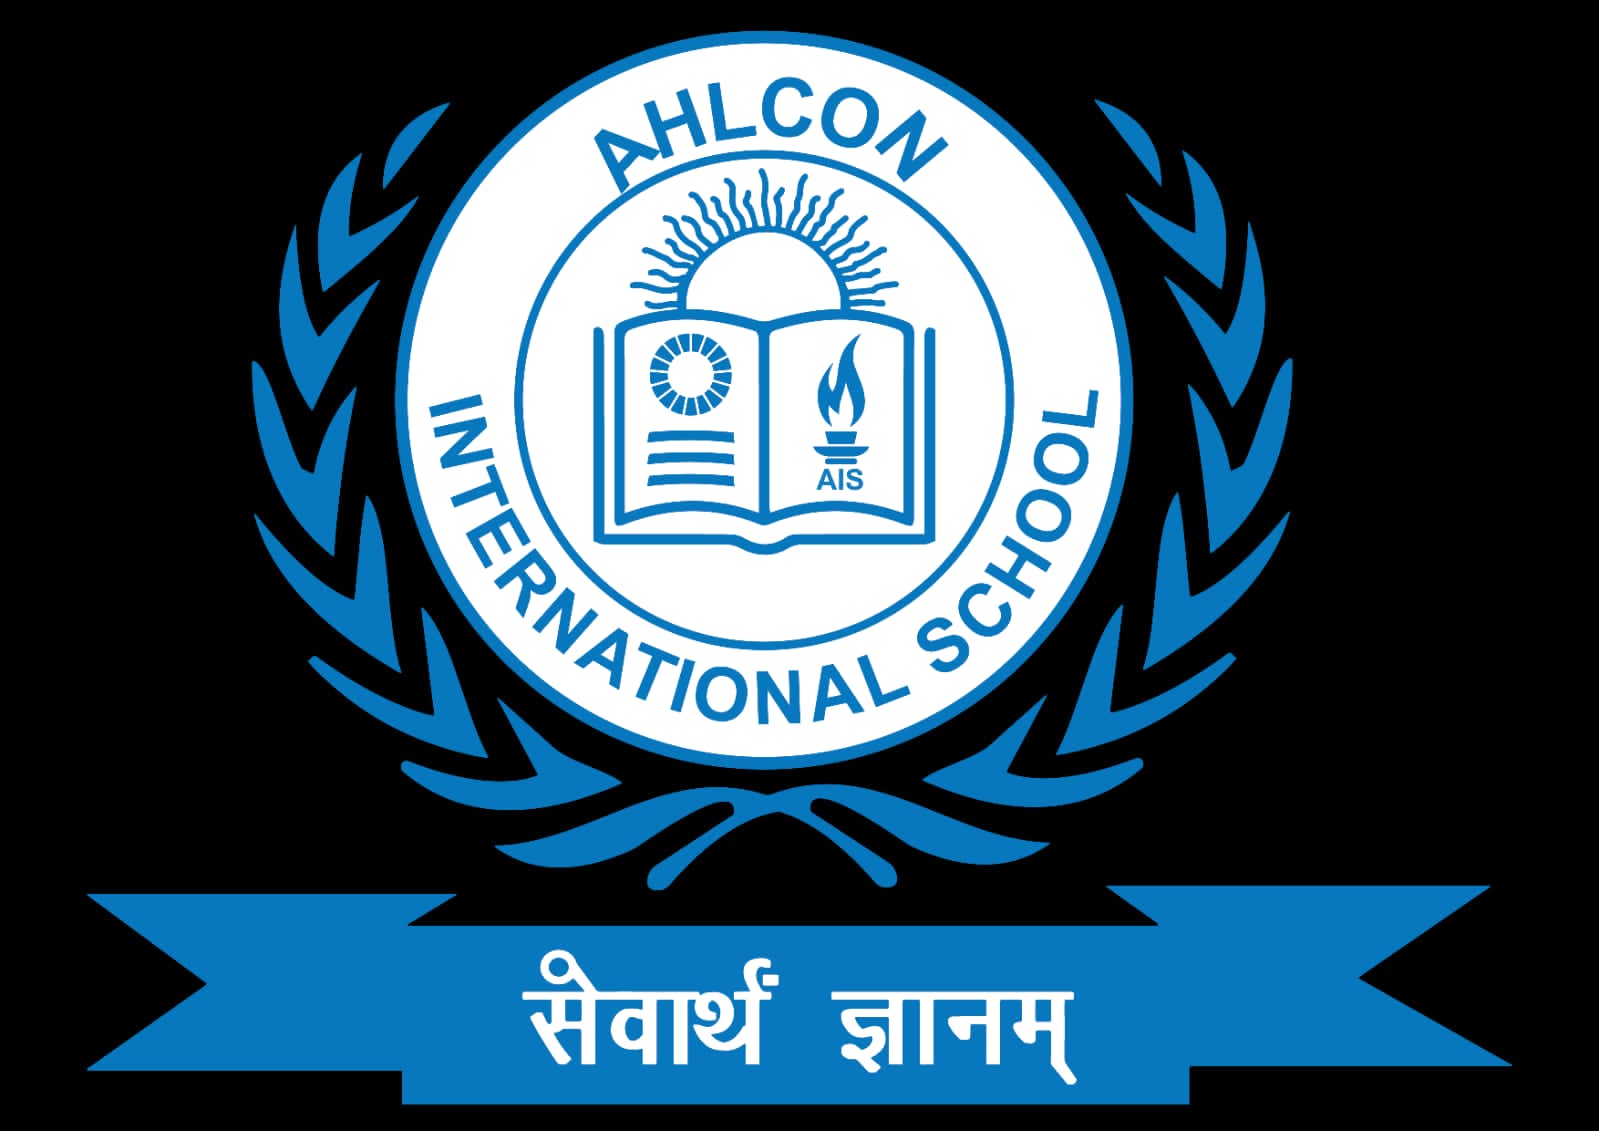 Ahlcon International